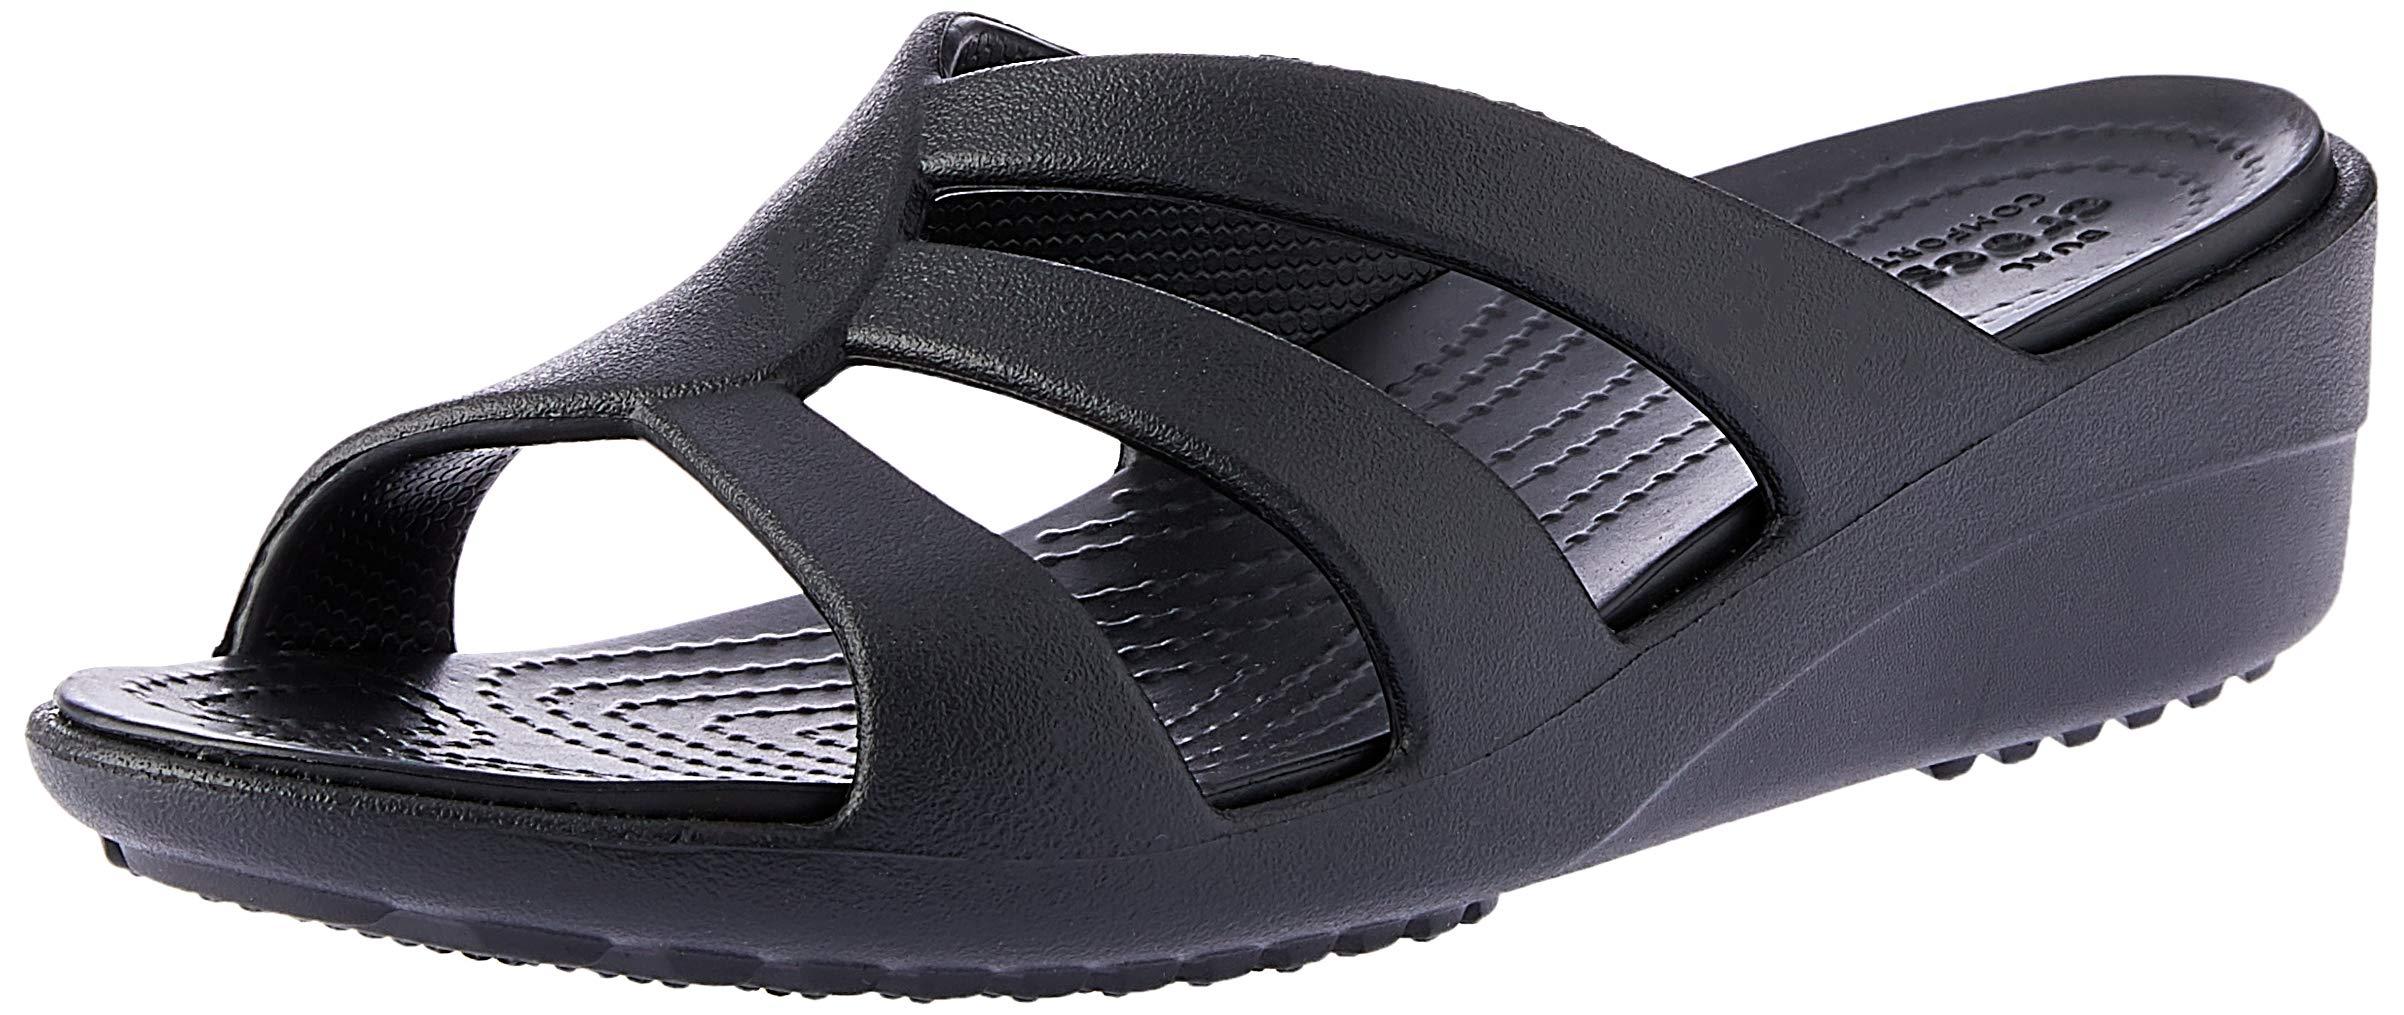 Crocs™ Sanrah Strappy Wedge Sandal in Black | Lyst